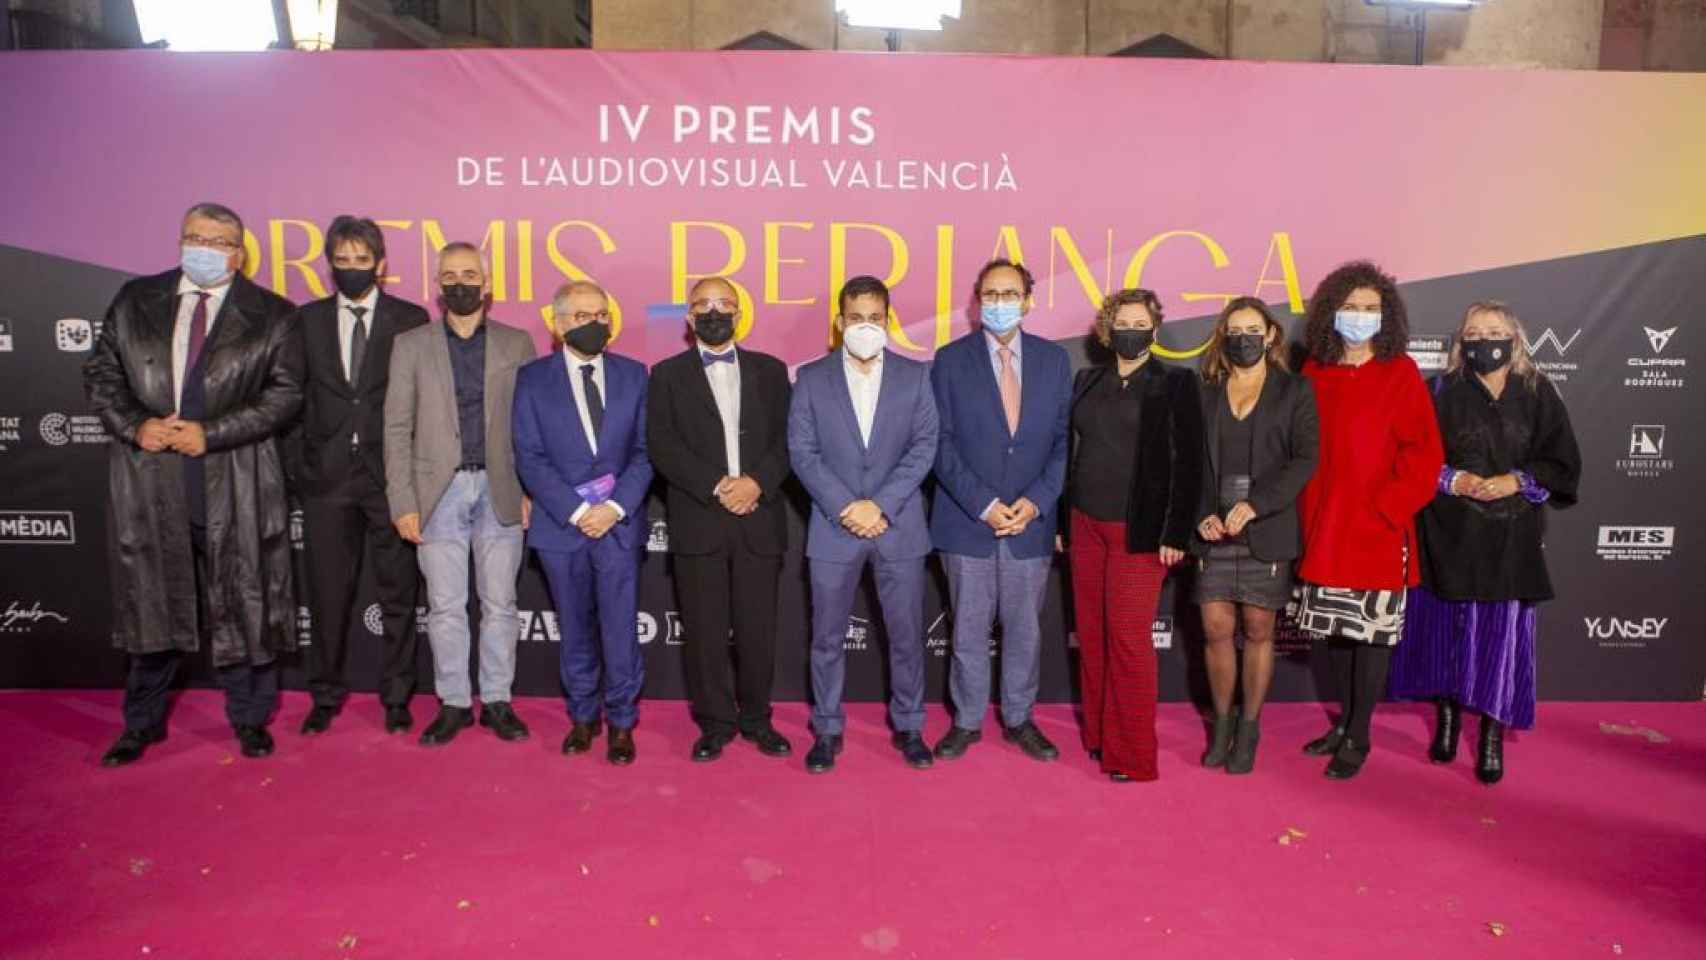 IV Premios Berlanga del Audiovisual Valenciano.